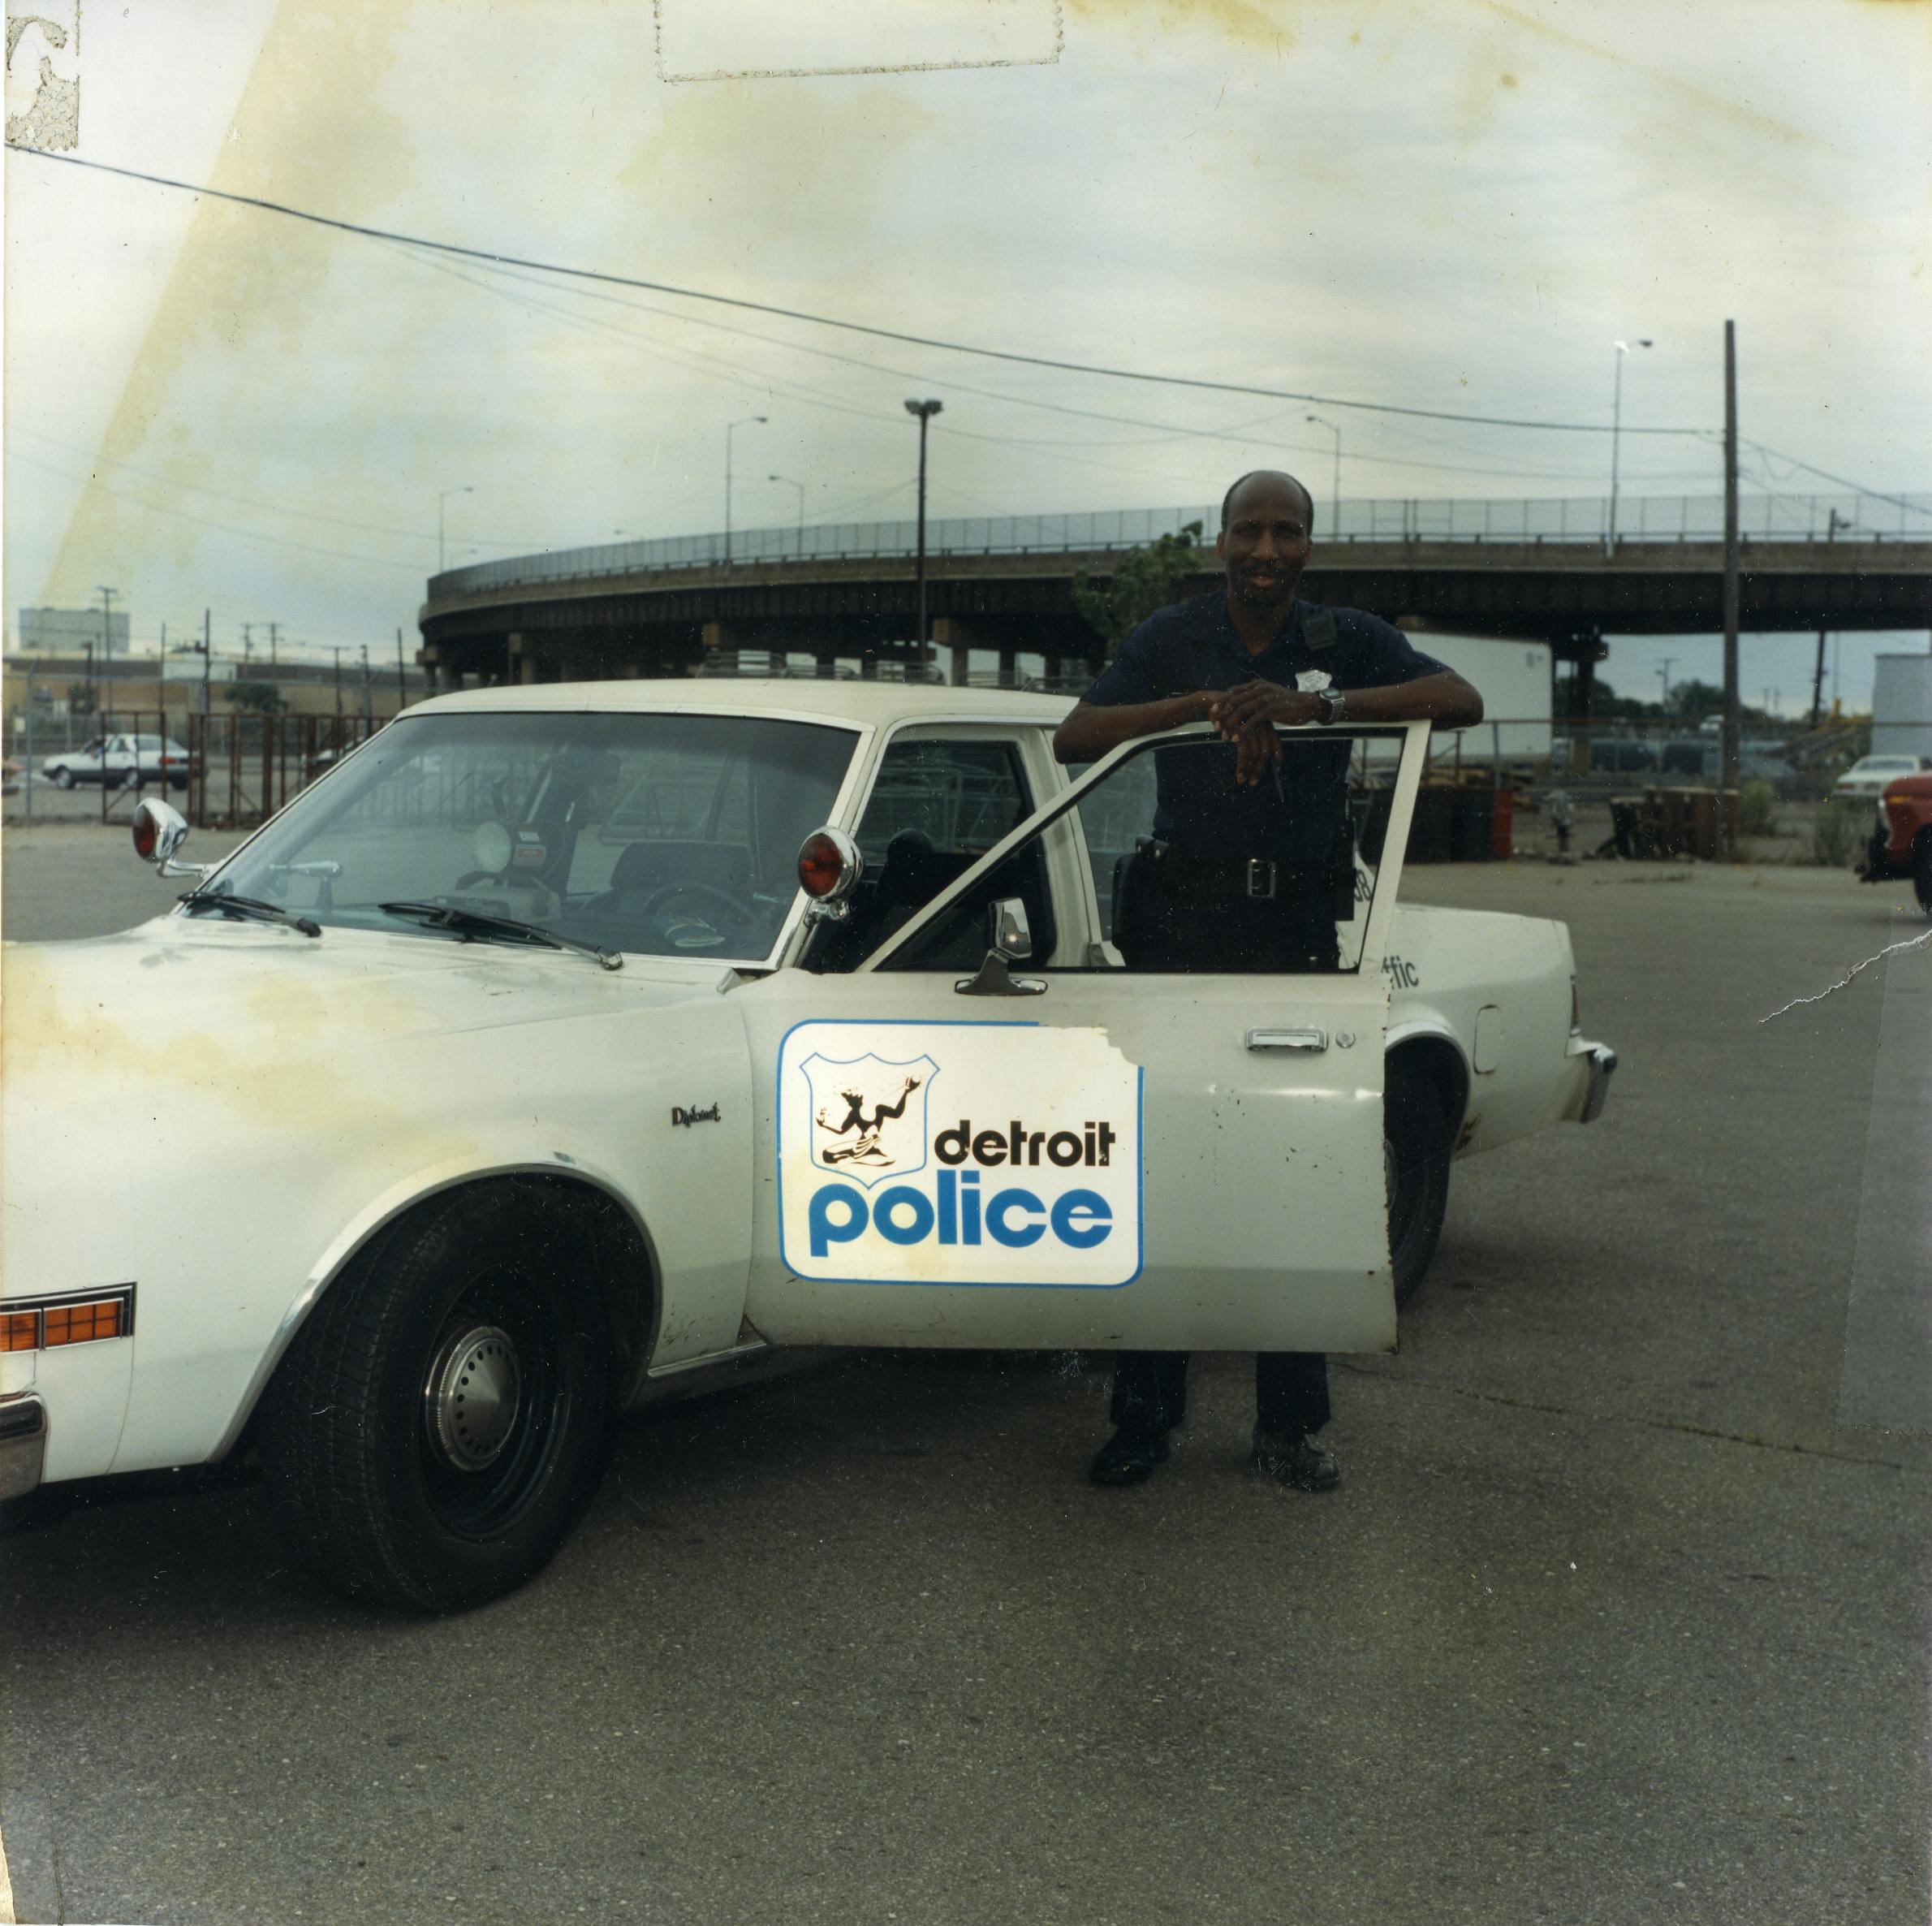 detroit soldier godfrey qualls in police uniform with retro squad car